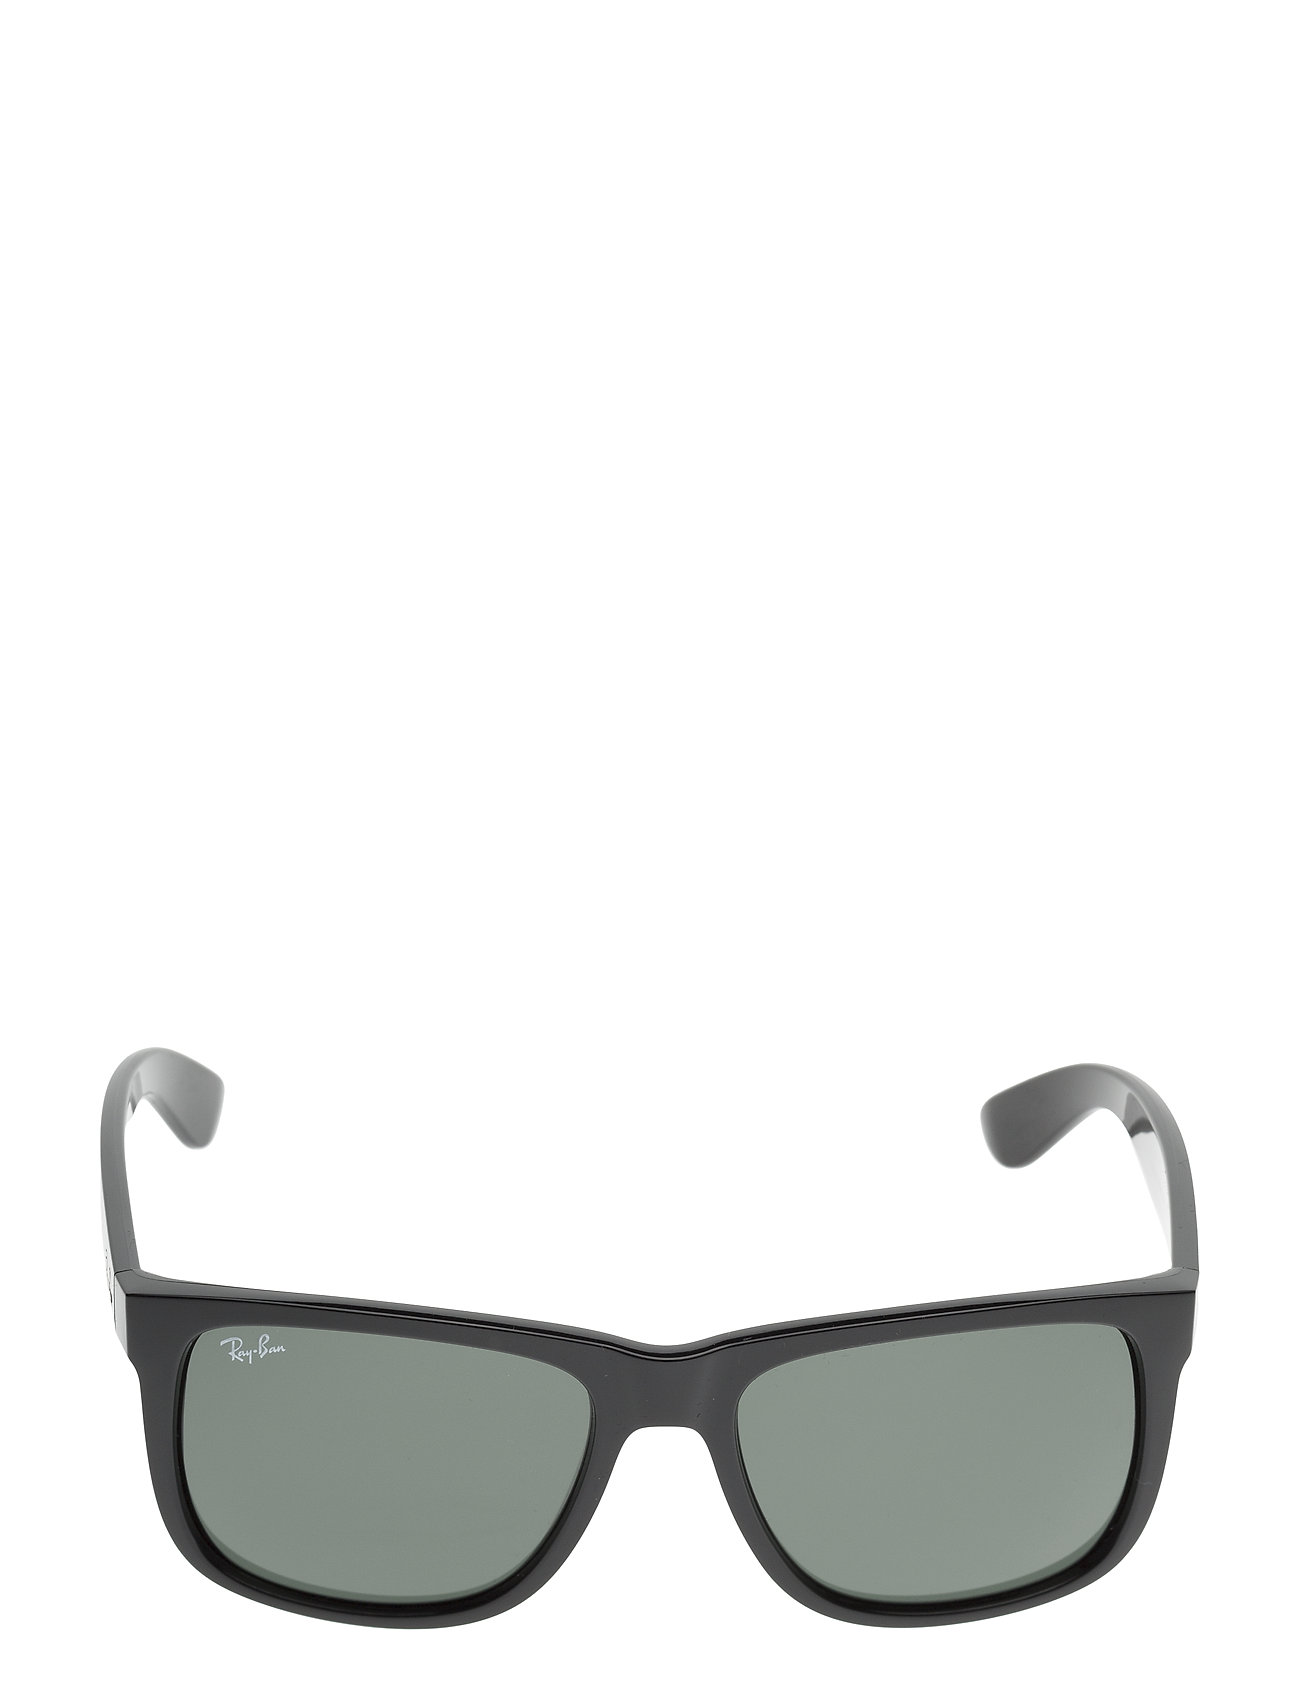 Ray-Ban "Justin Designers Sunglasses D-frame- Wayfarer Black Ray-Ban"